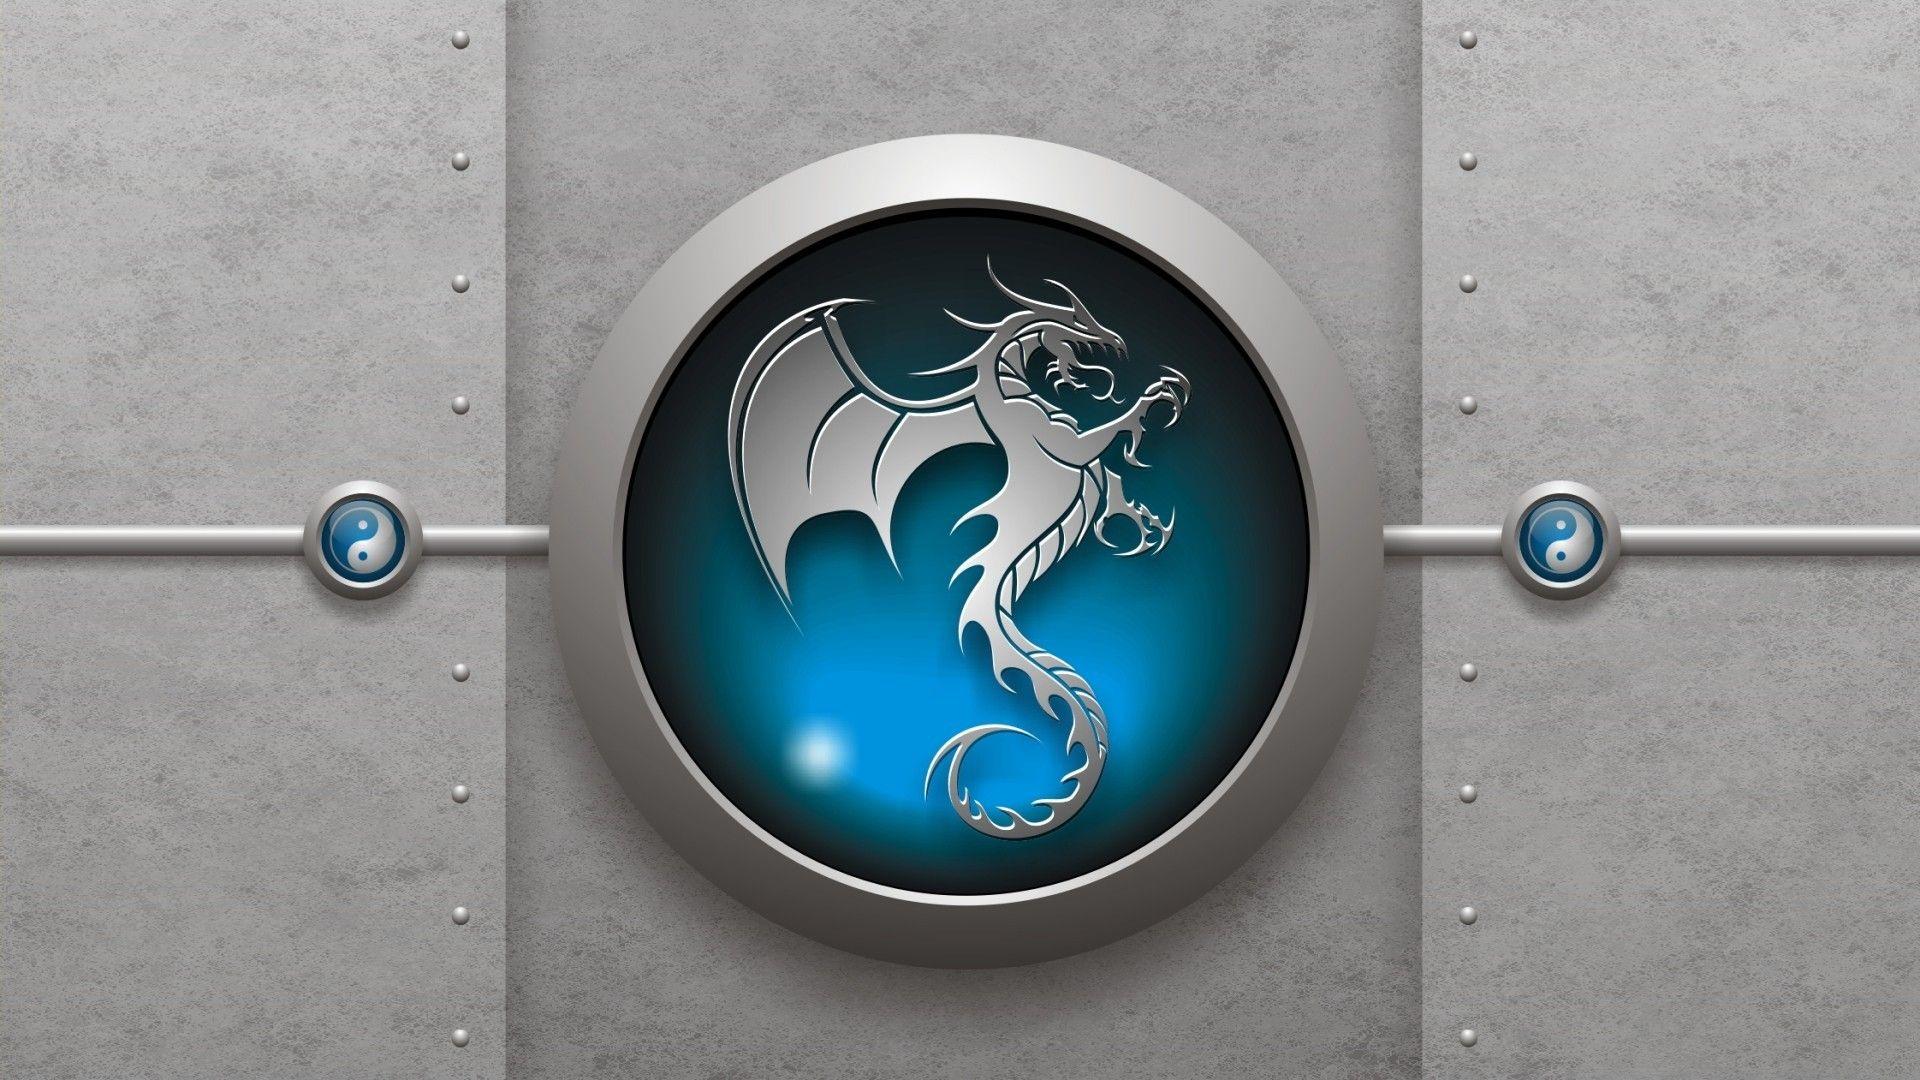 Cool Ice Dragon Logo - Ice dragon clan wallpaper. PC